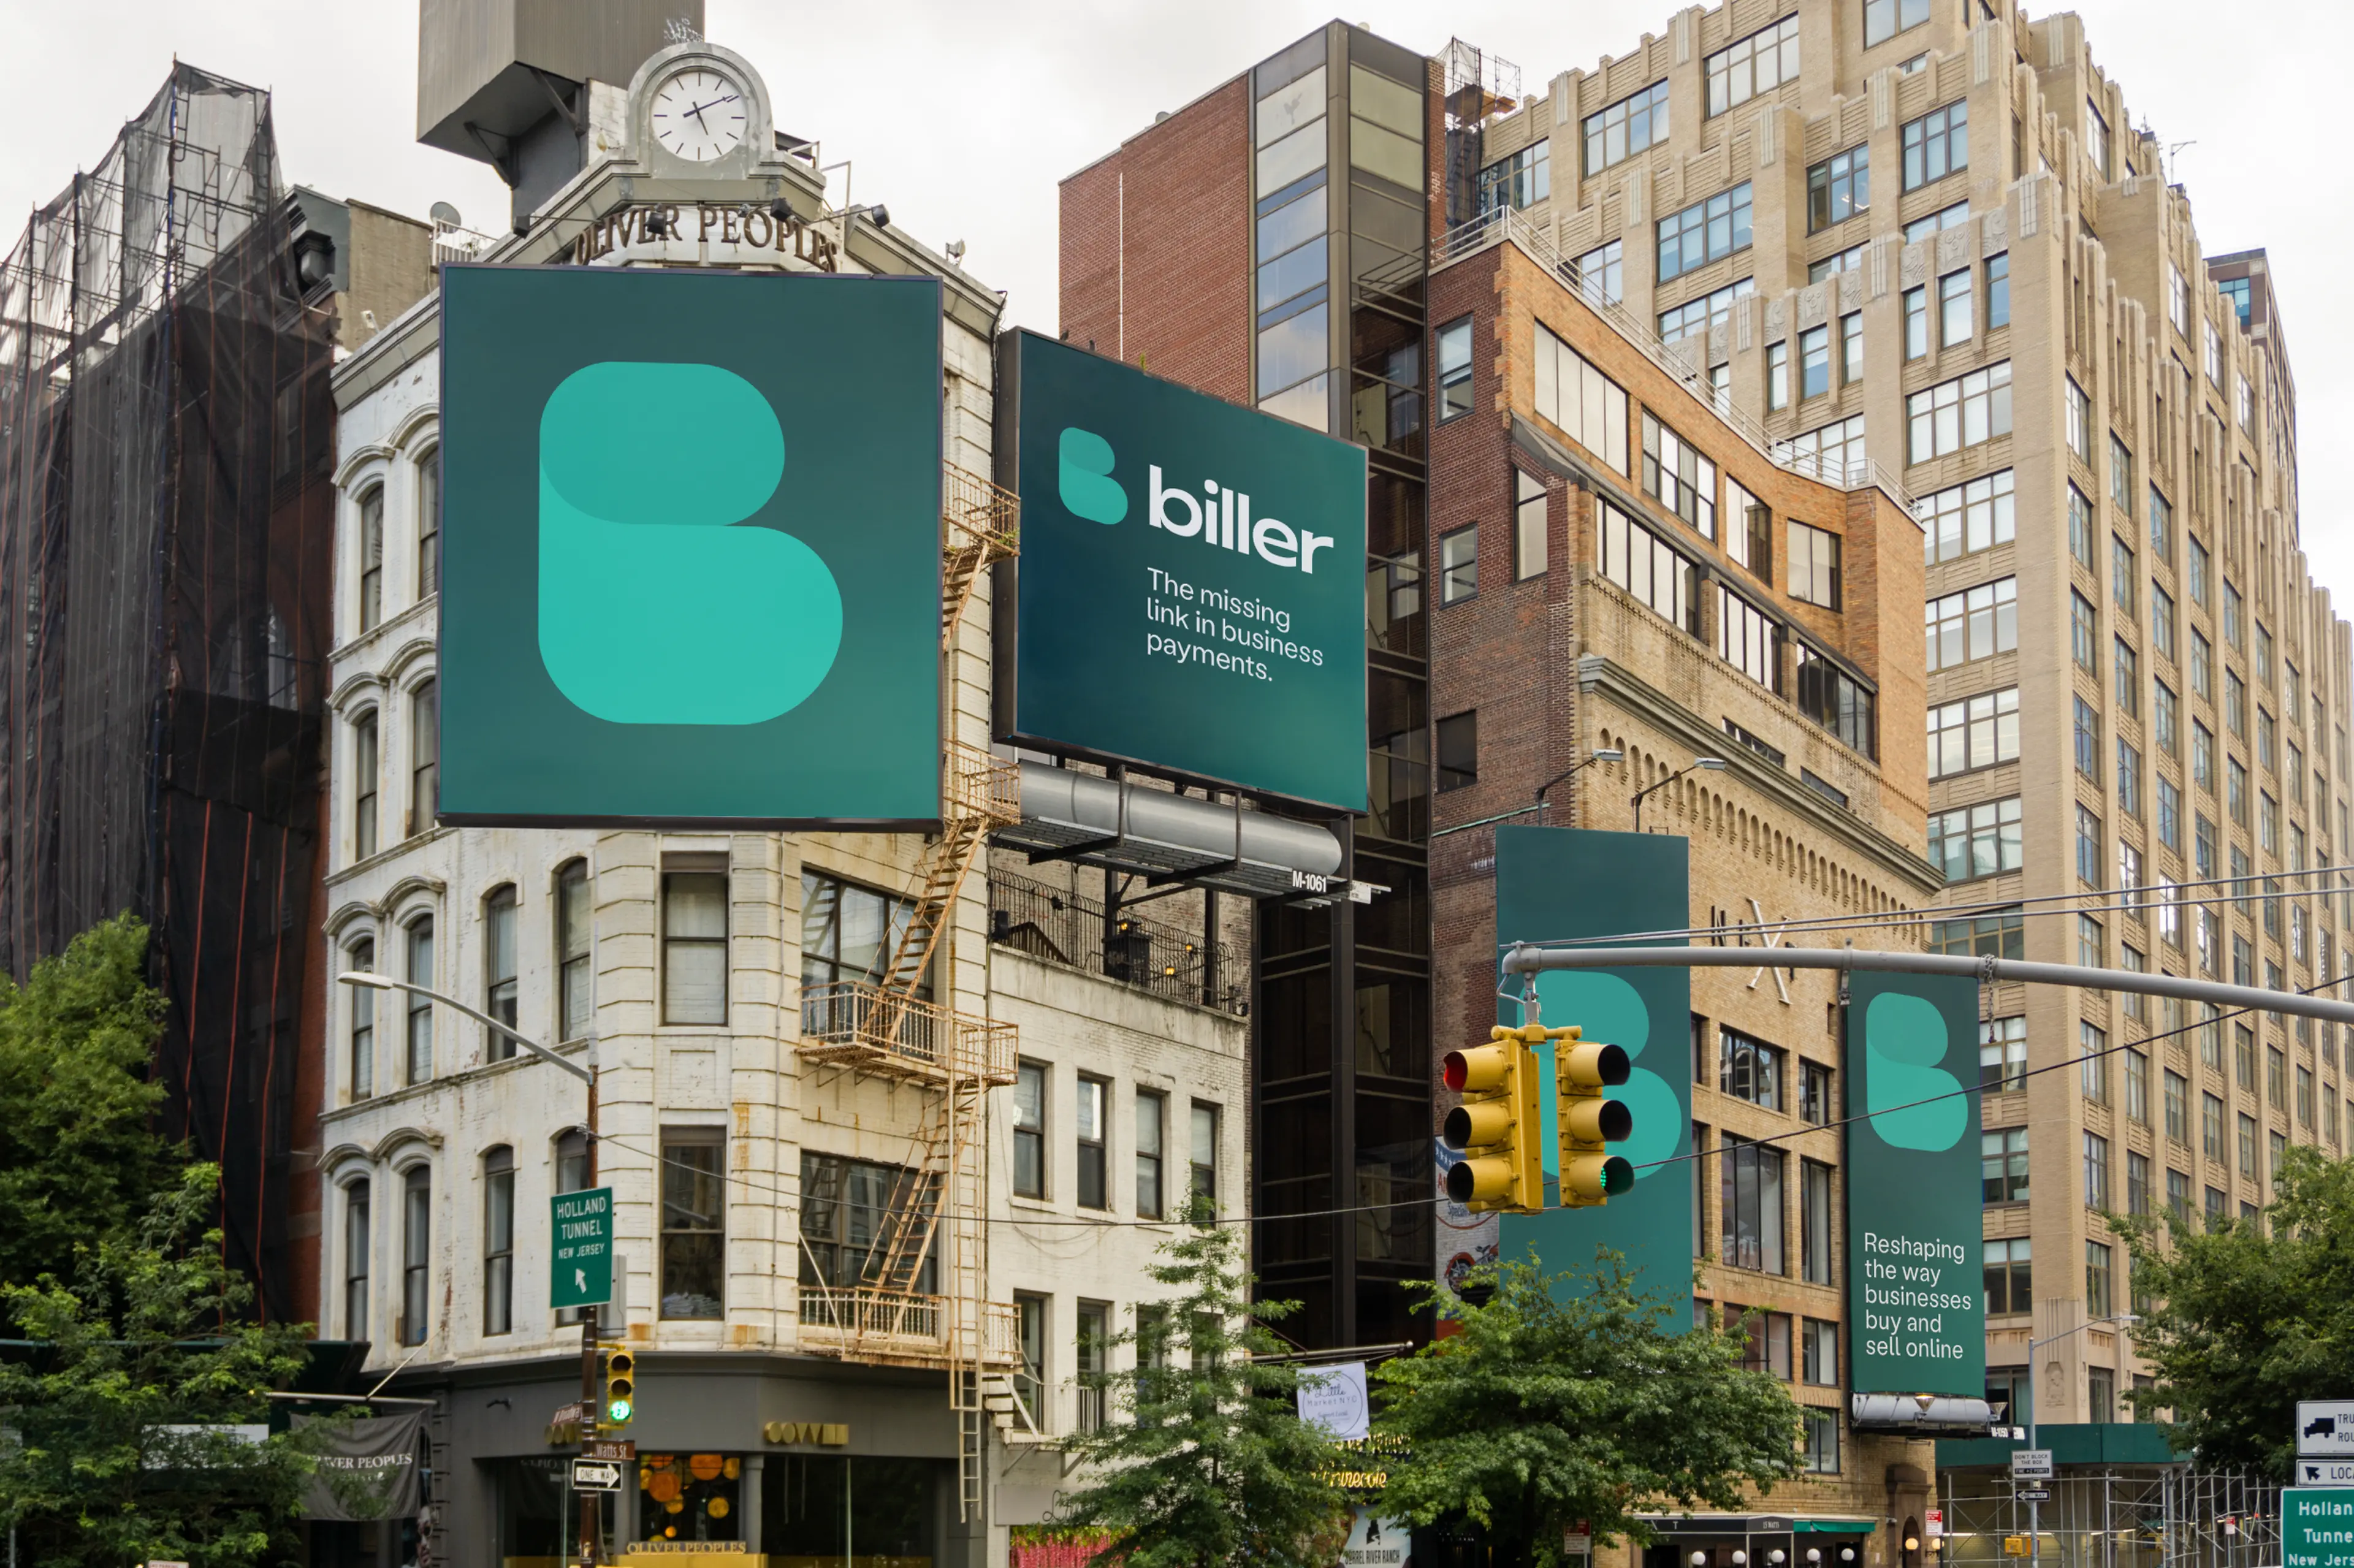 Buildings with big billboards showing biller logo in NYC